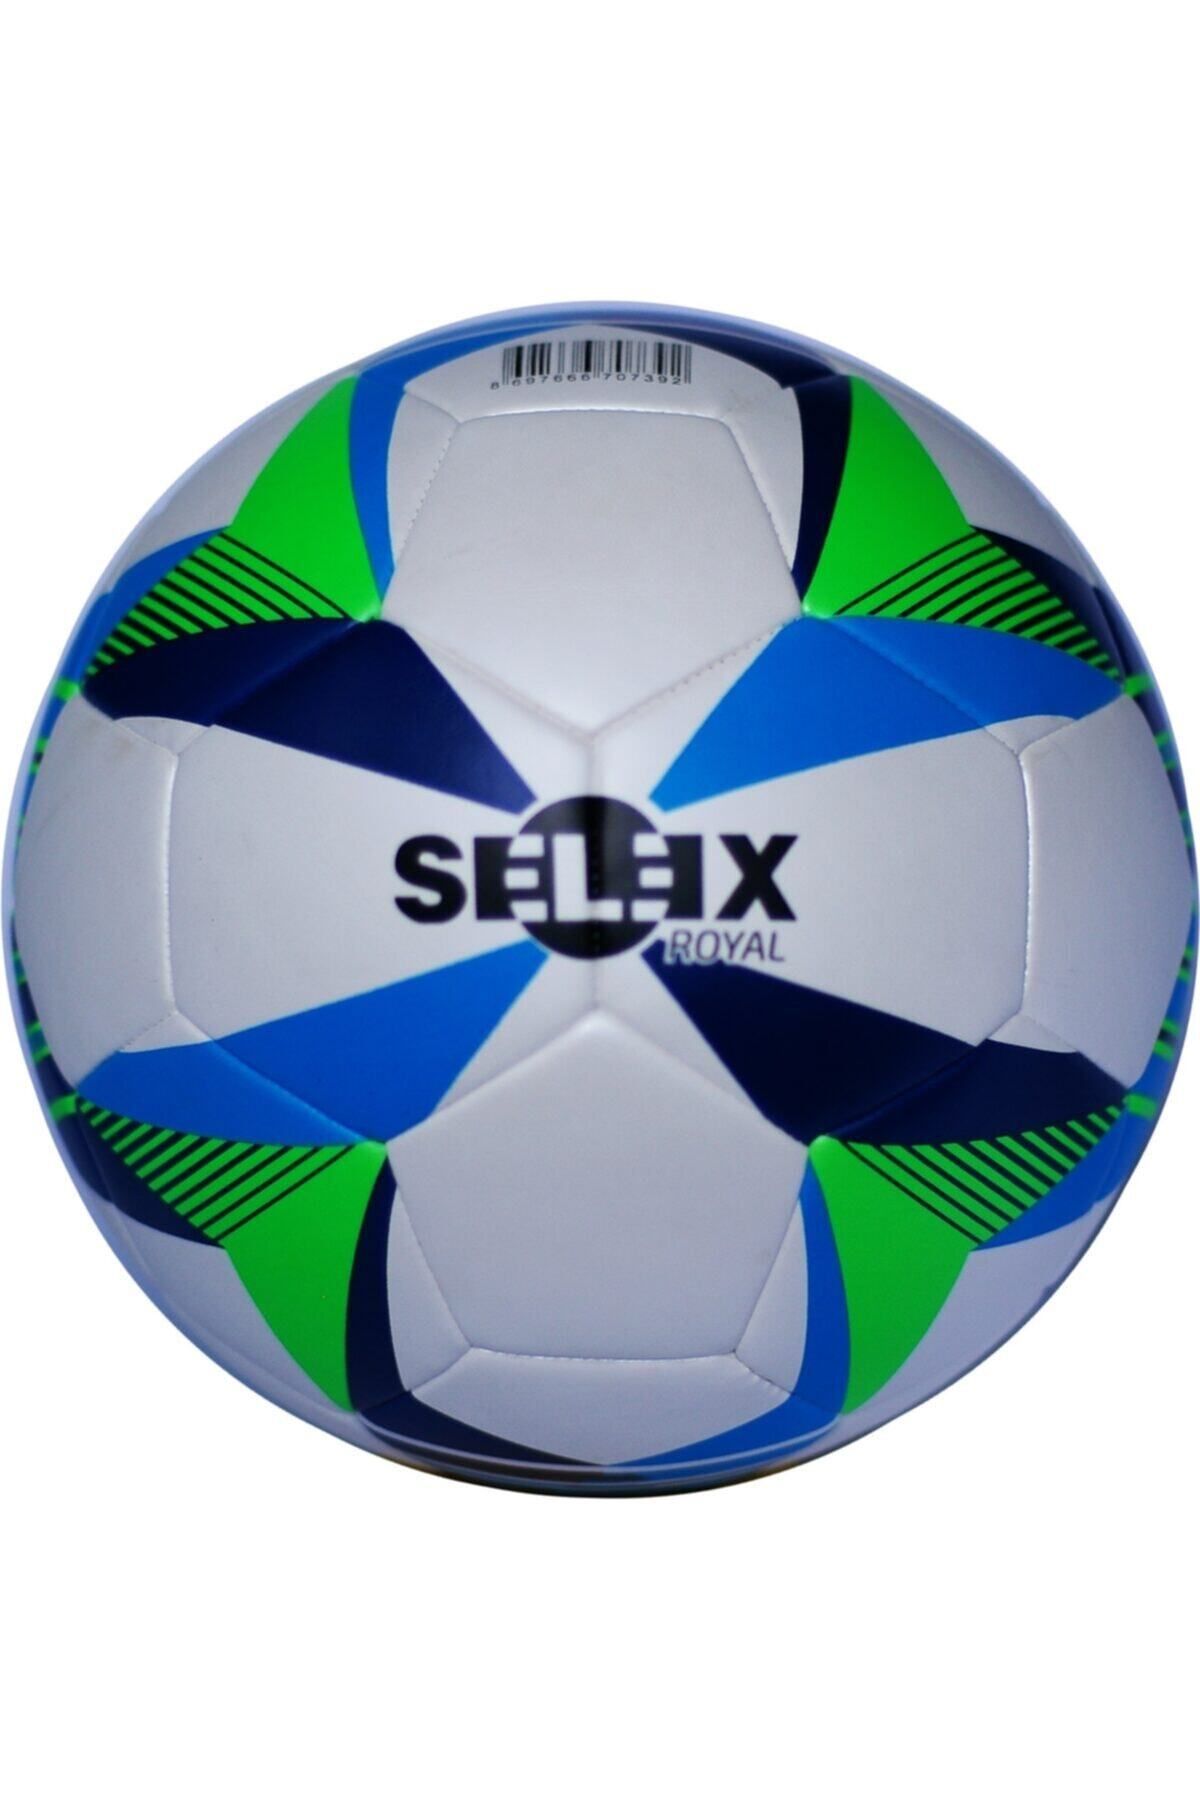 SELEX Royal Unisex Futbol Topu 5 No